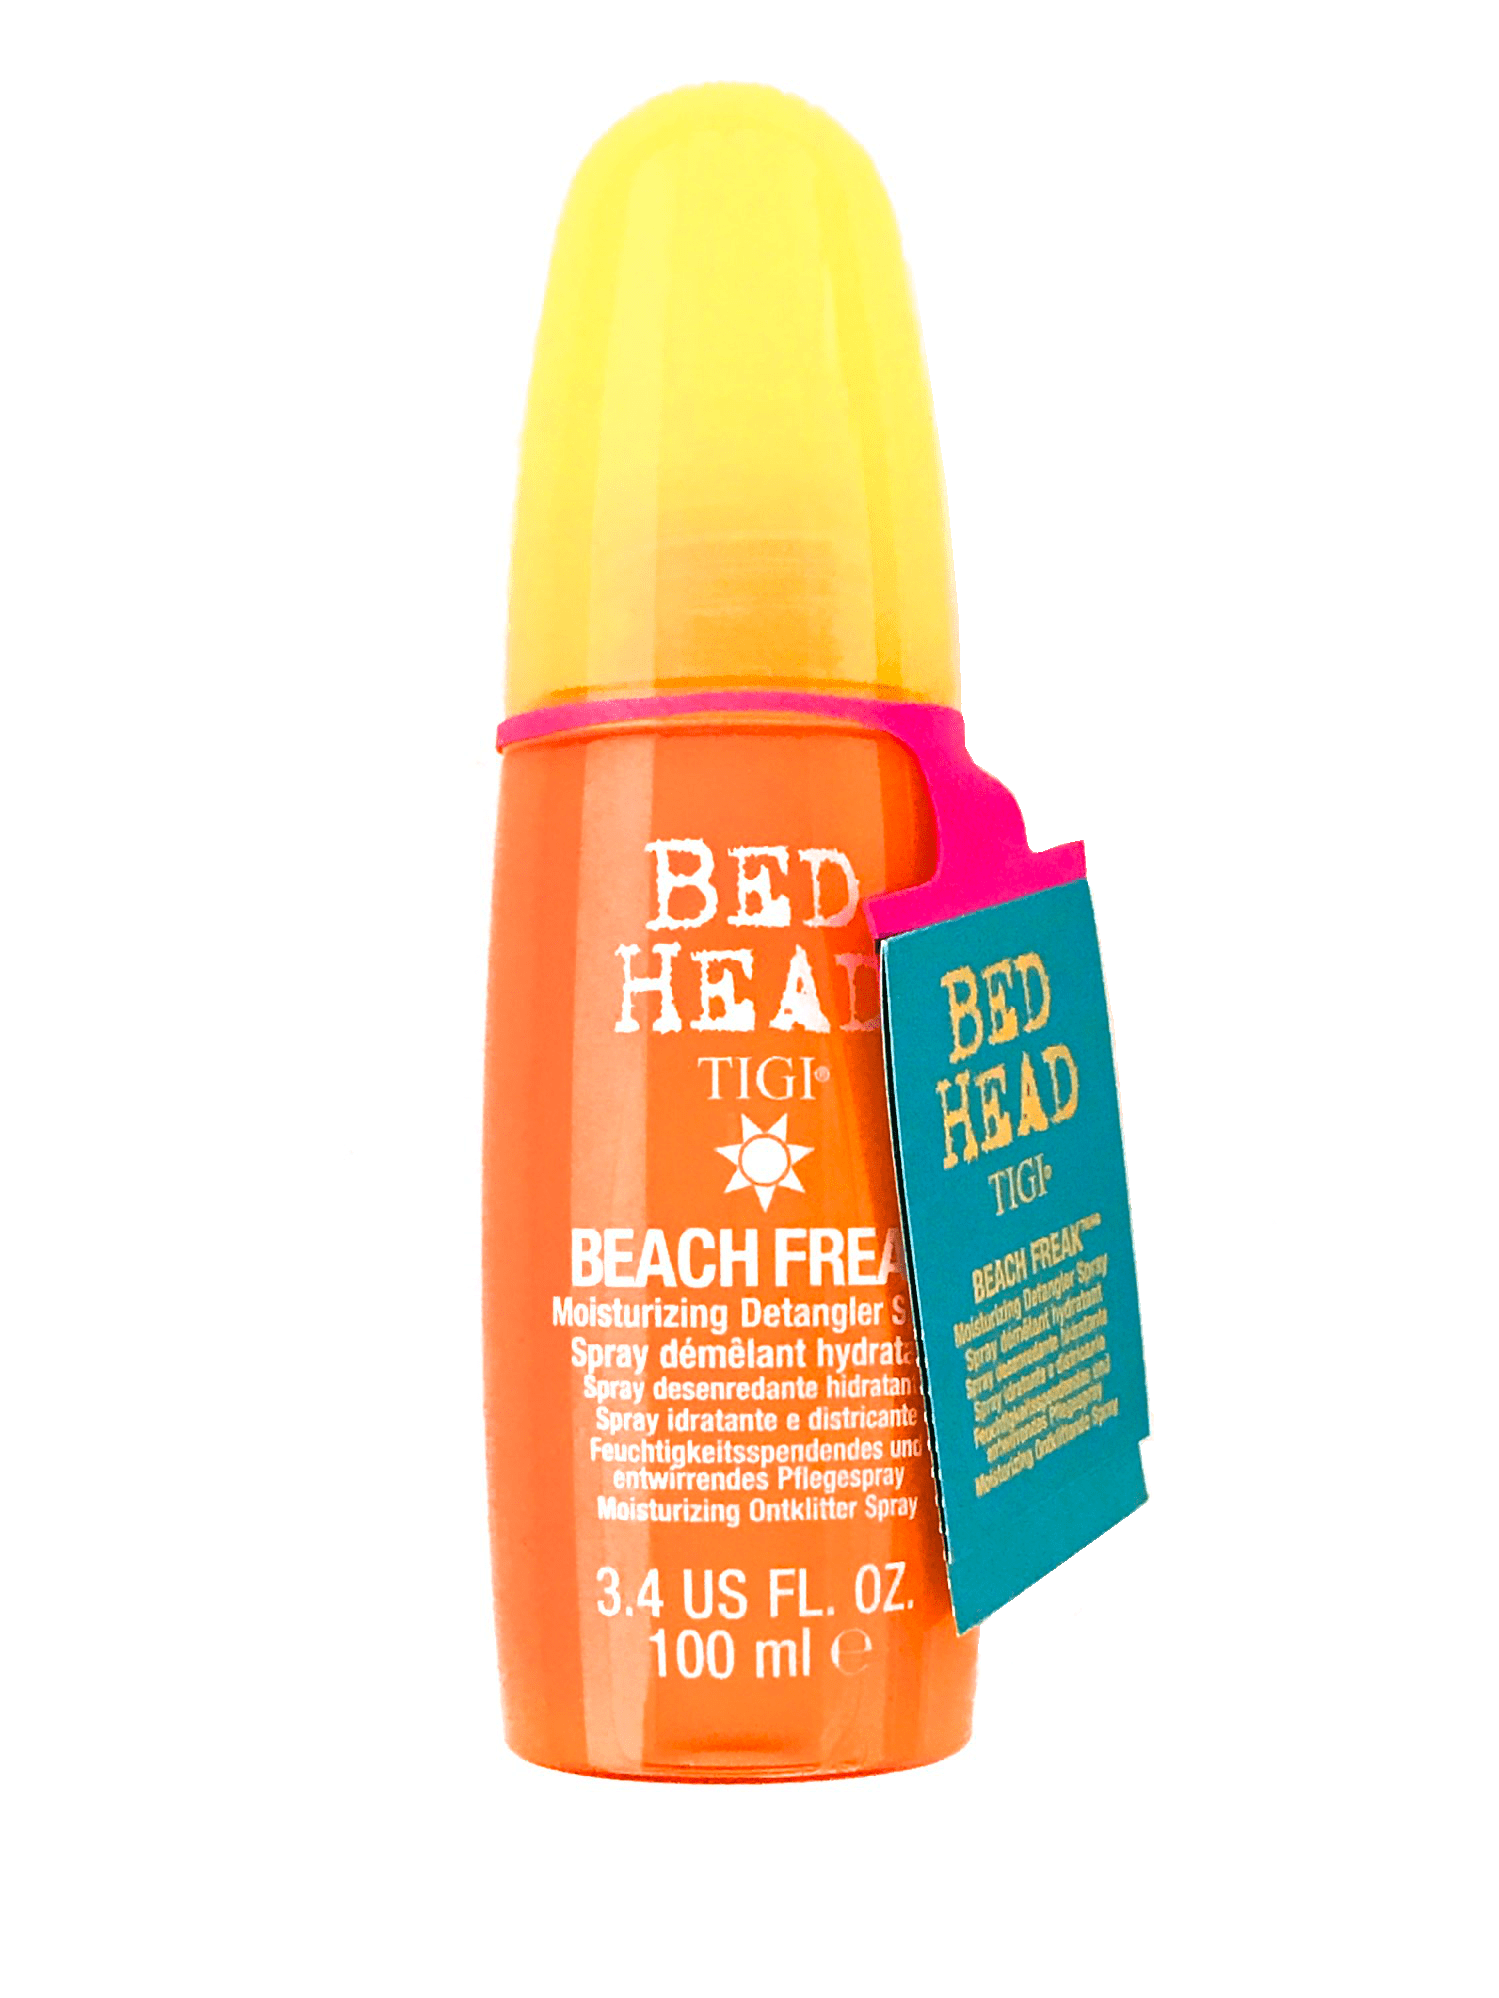 Tigi Bed Head Beach Freak Moisturizing Detangler Spray 3.4 Oz